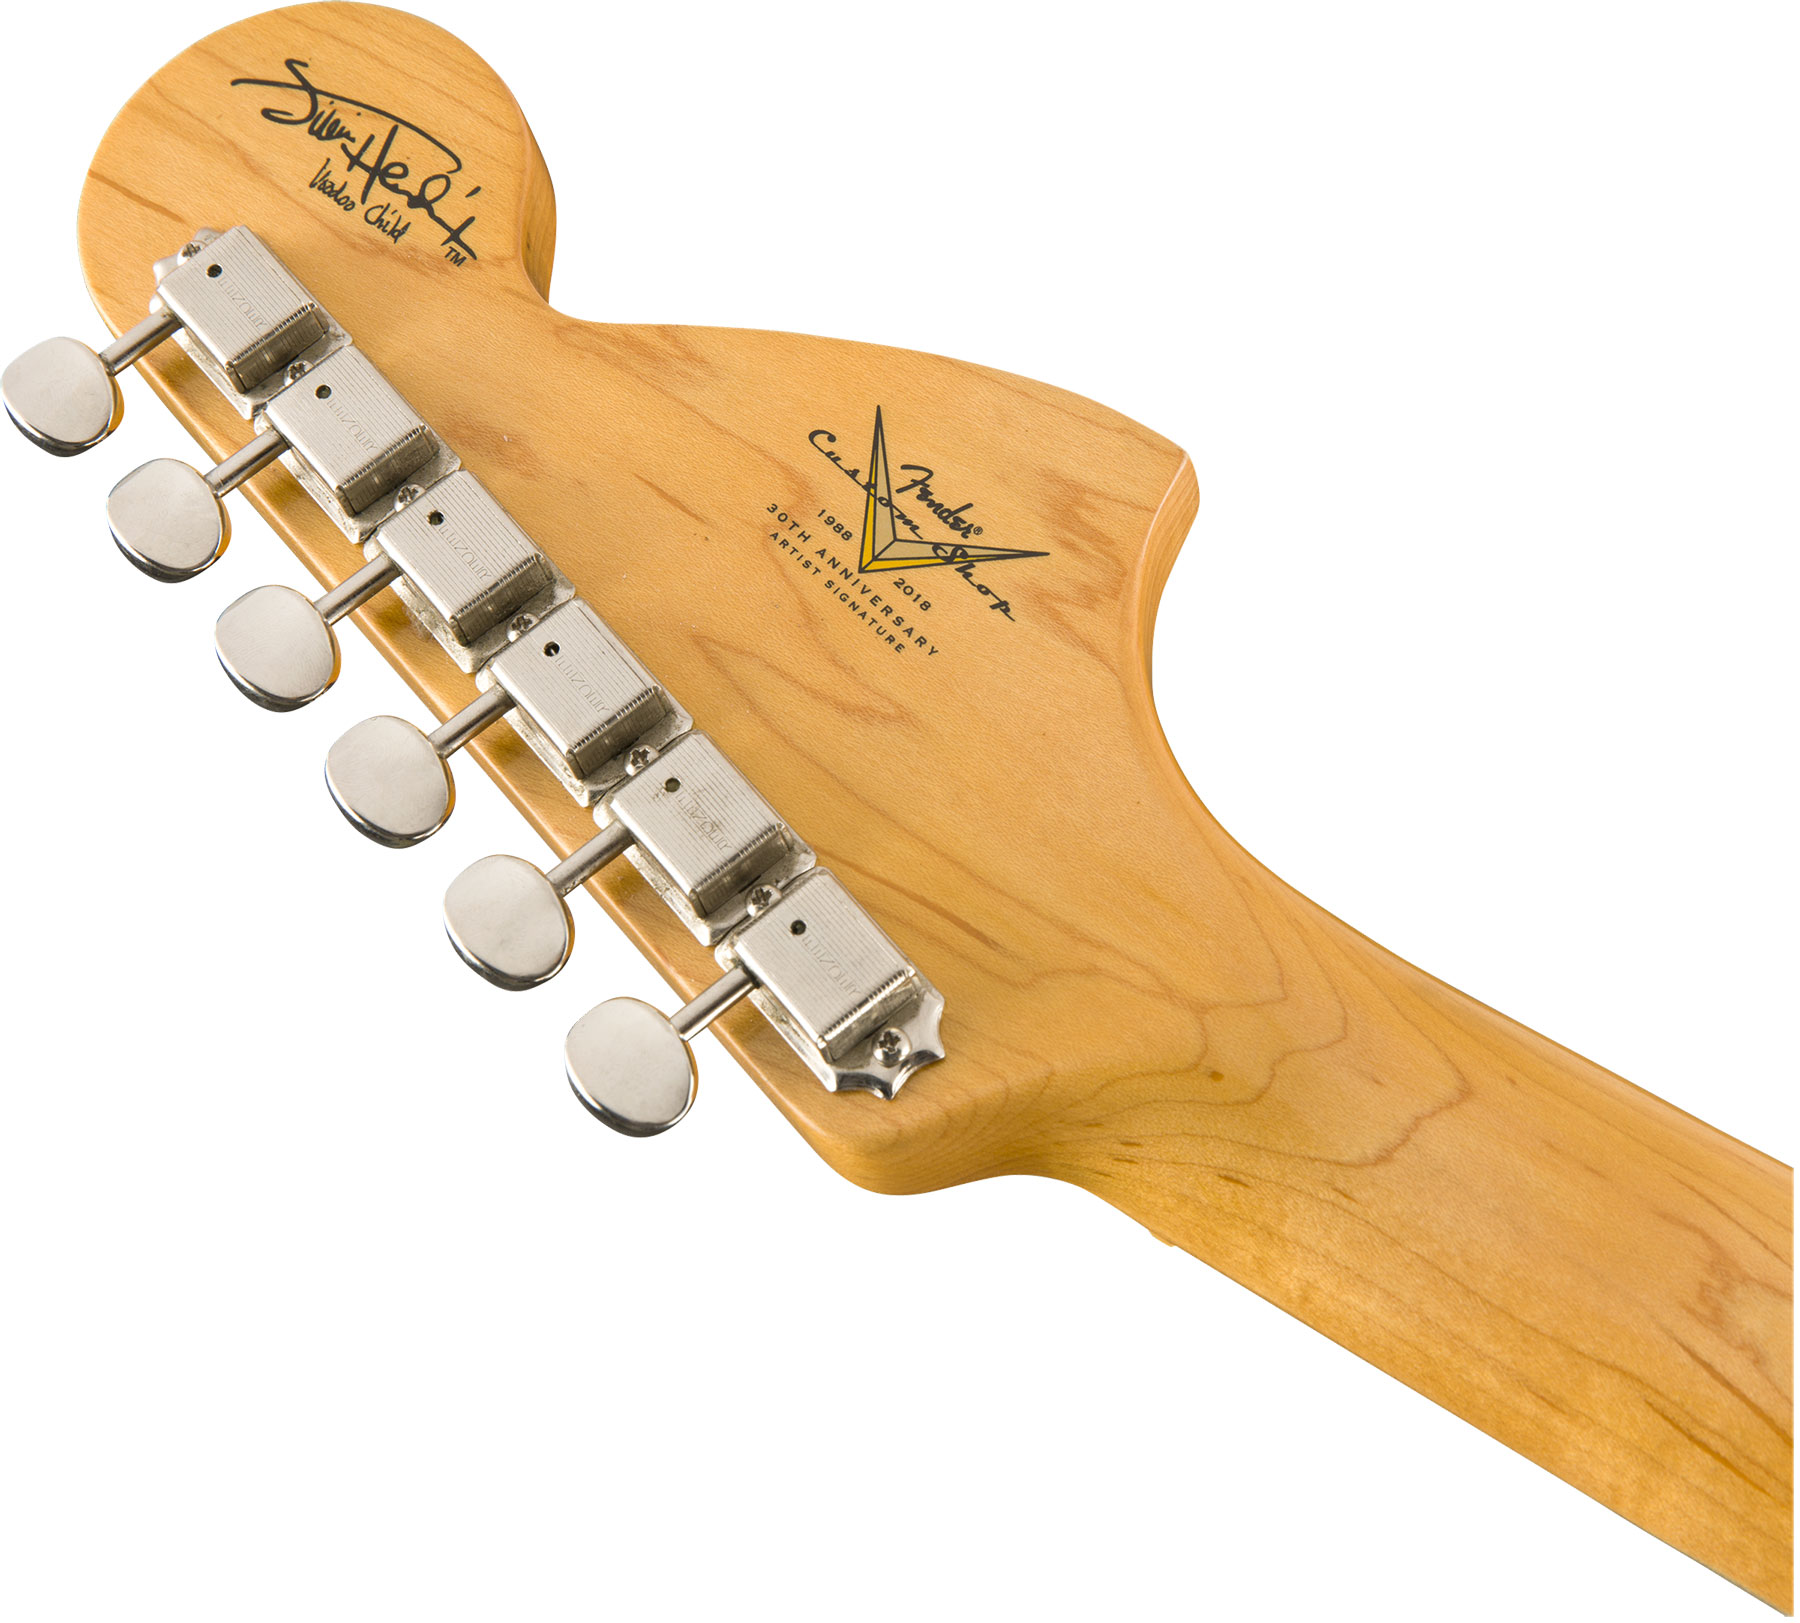 Fender Custom Shop Jimi Hendrix Strat Voodoo Child Signature 2018 Mn - Journeyman Relic Olympic White - Guitarra eléctrica con forma de str. - Variati